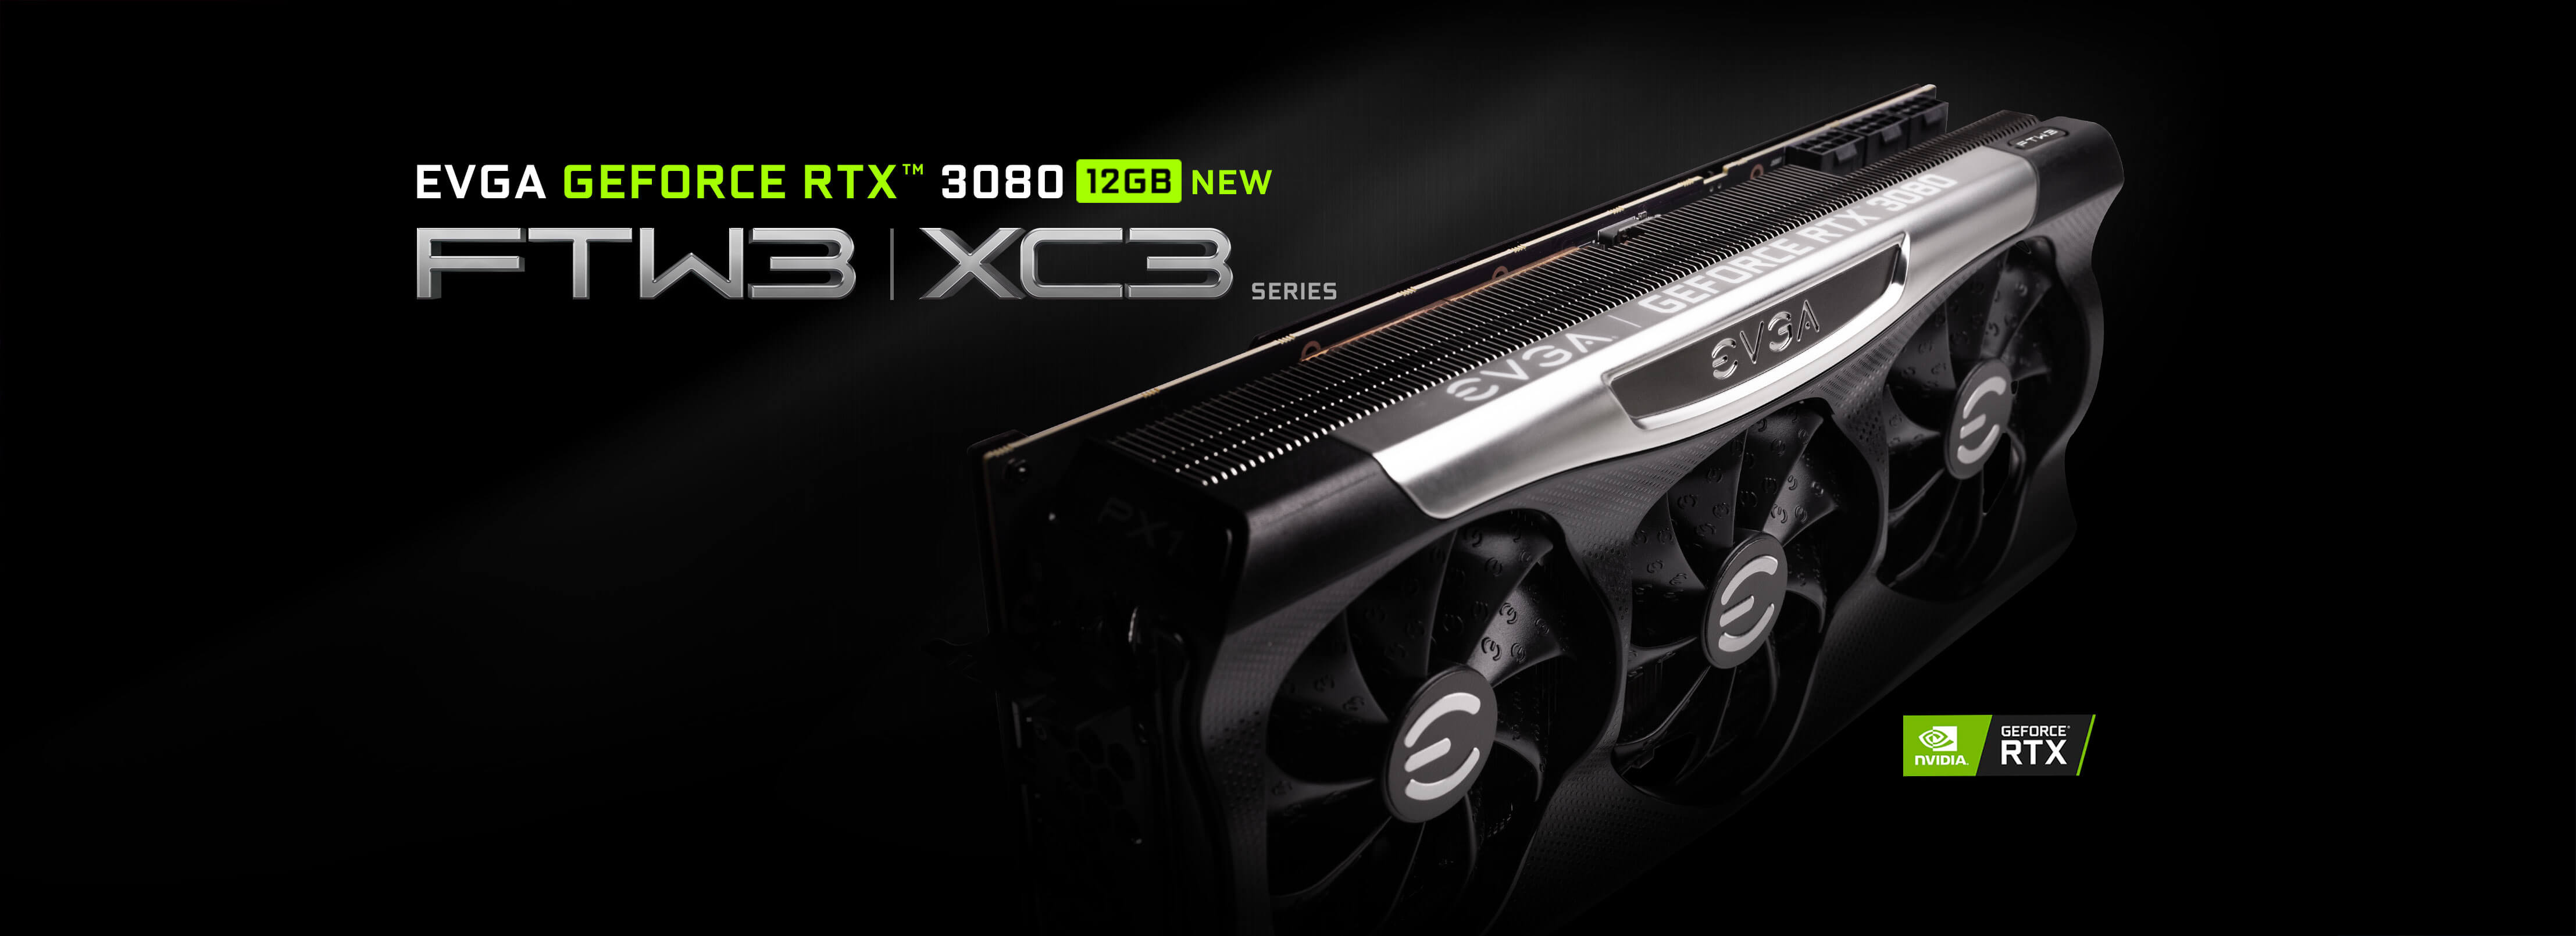 EVGA GeForce RTX™ 3080 12GB